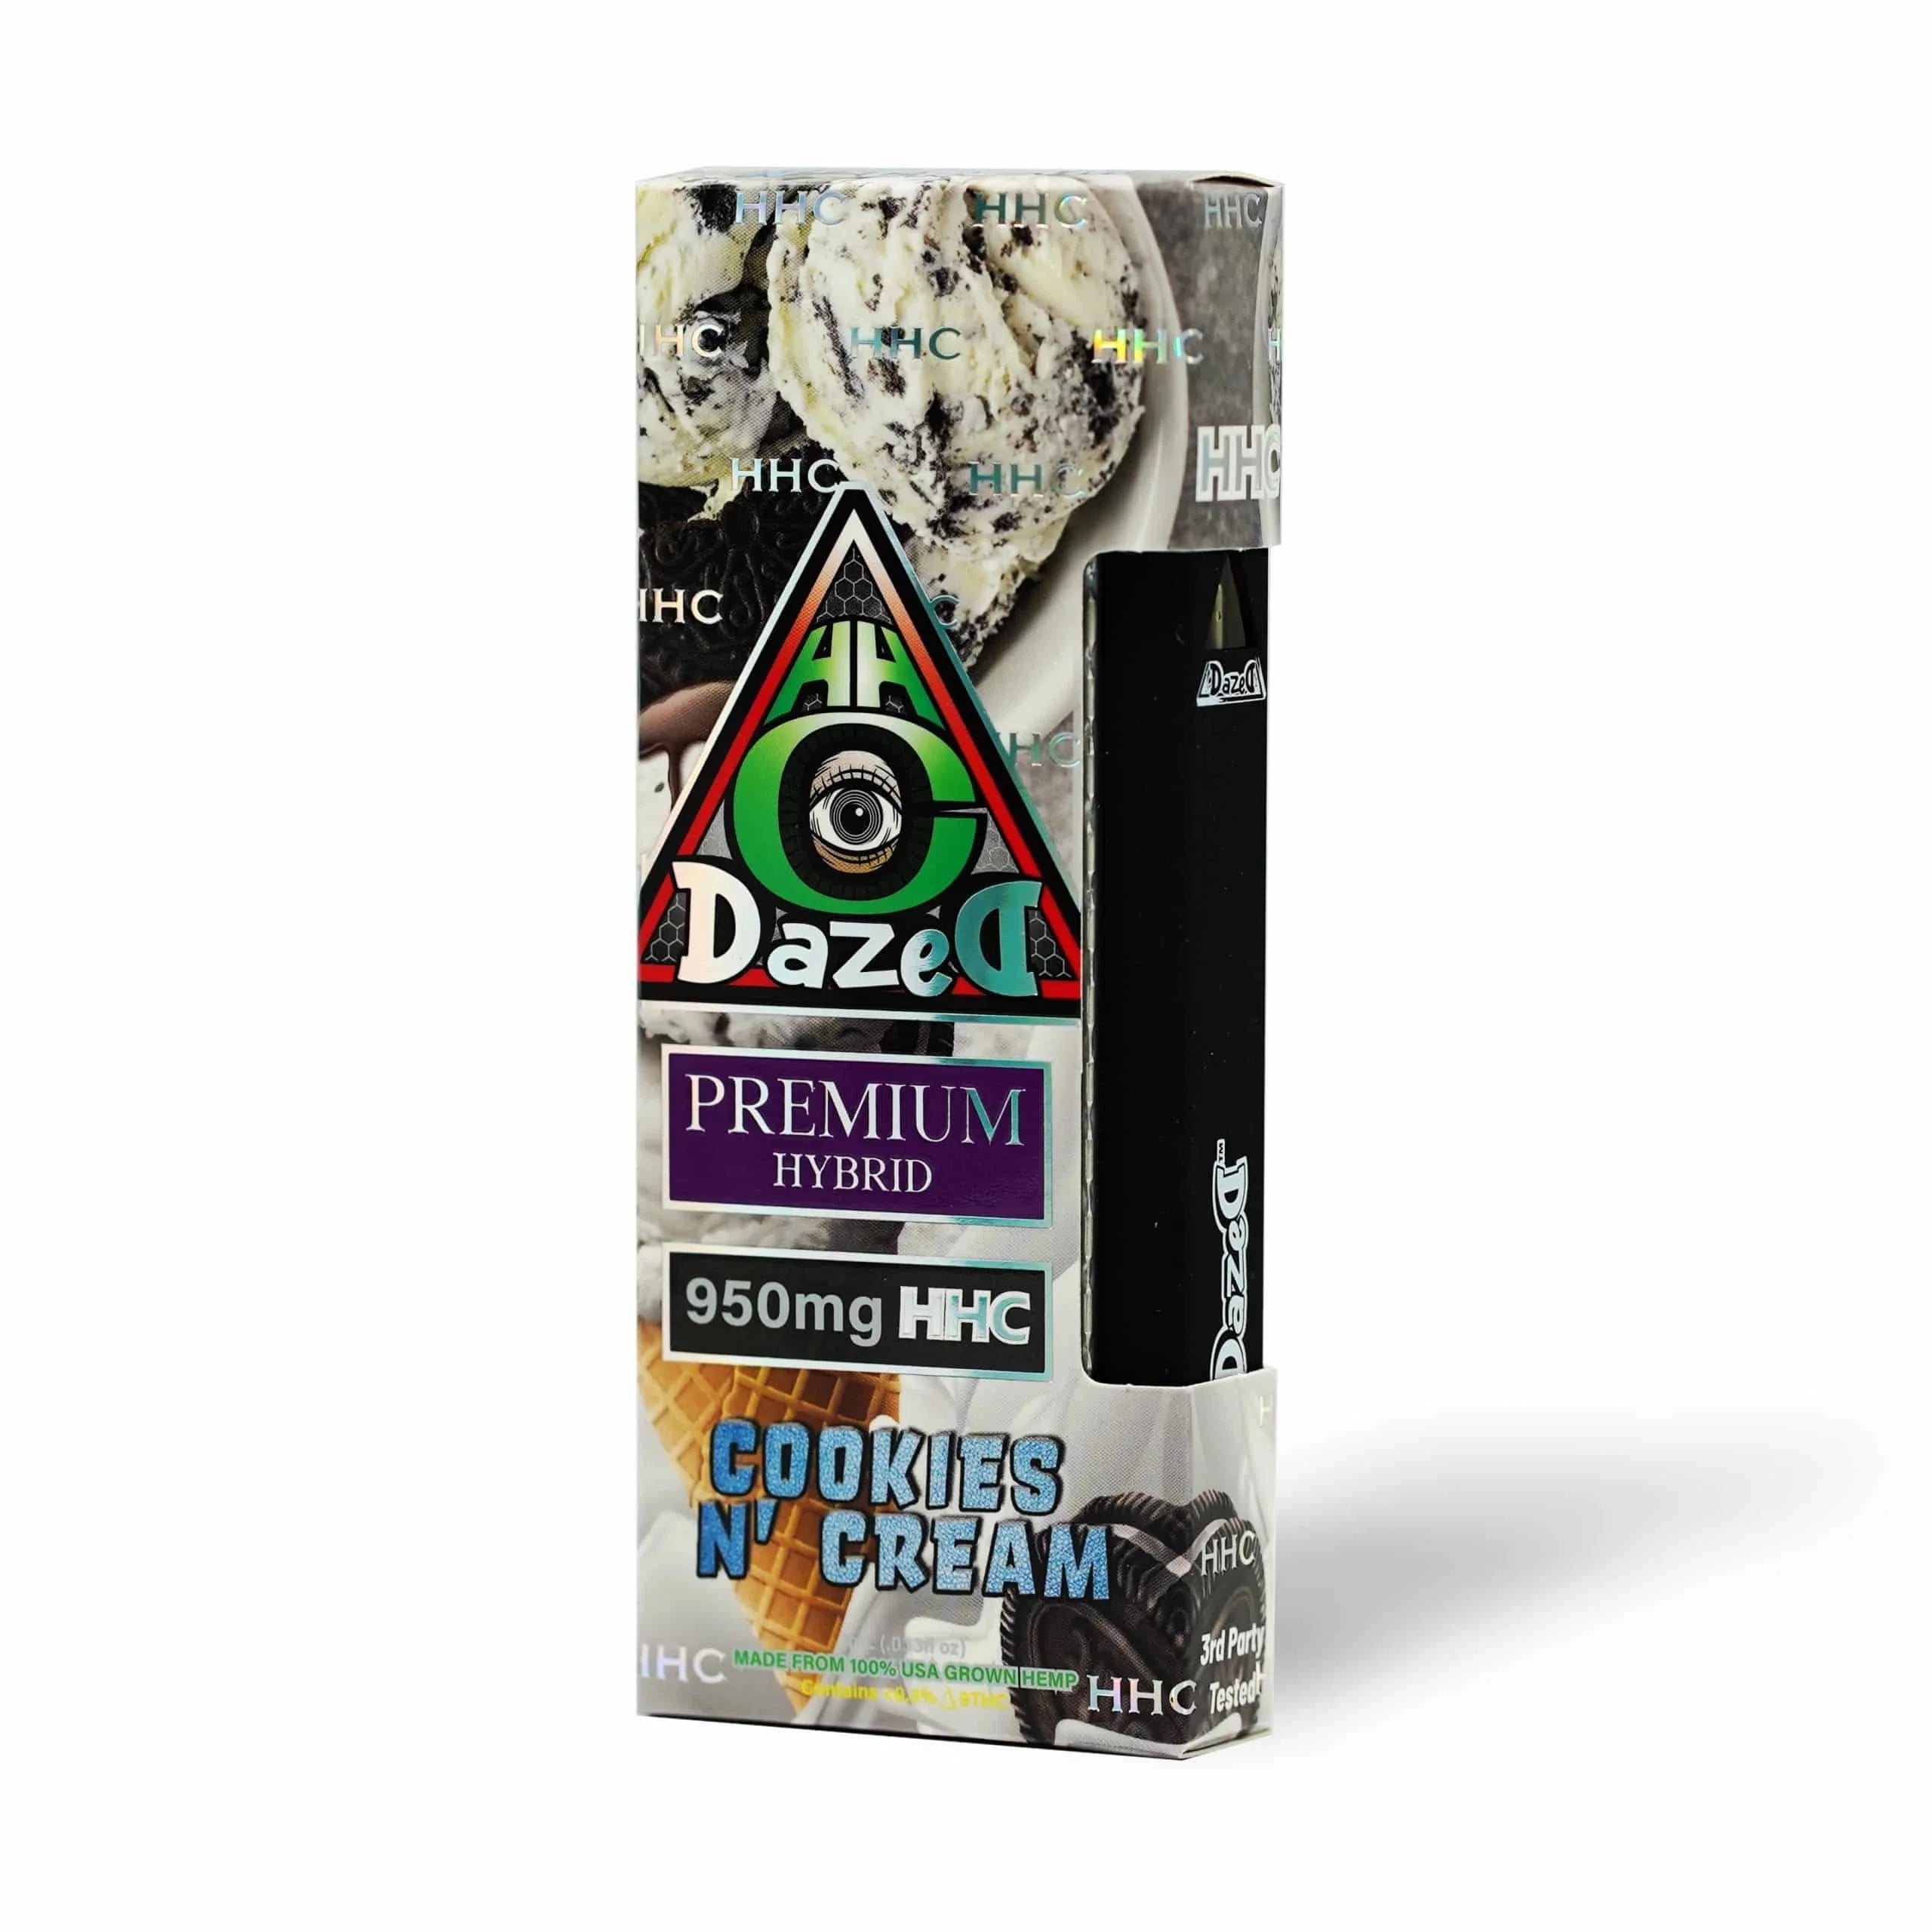 DazeD8 Cookies Cream HHC Disposable (1g) Best Price